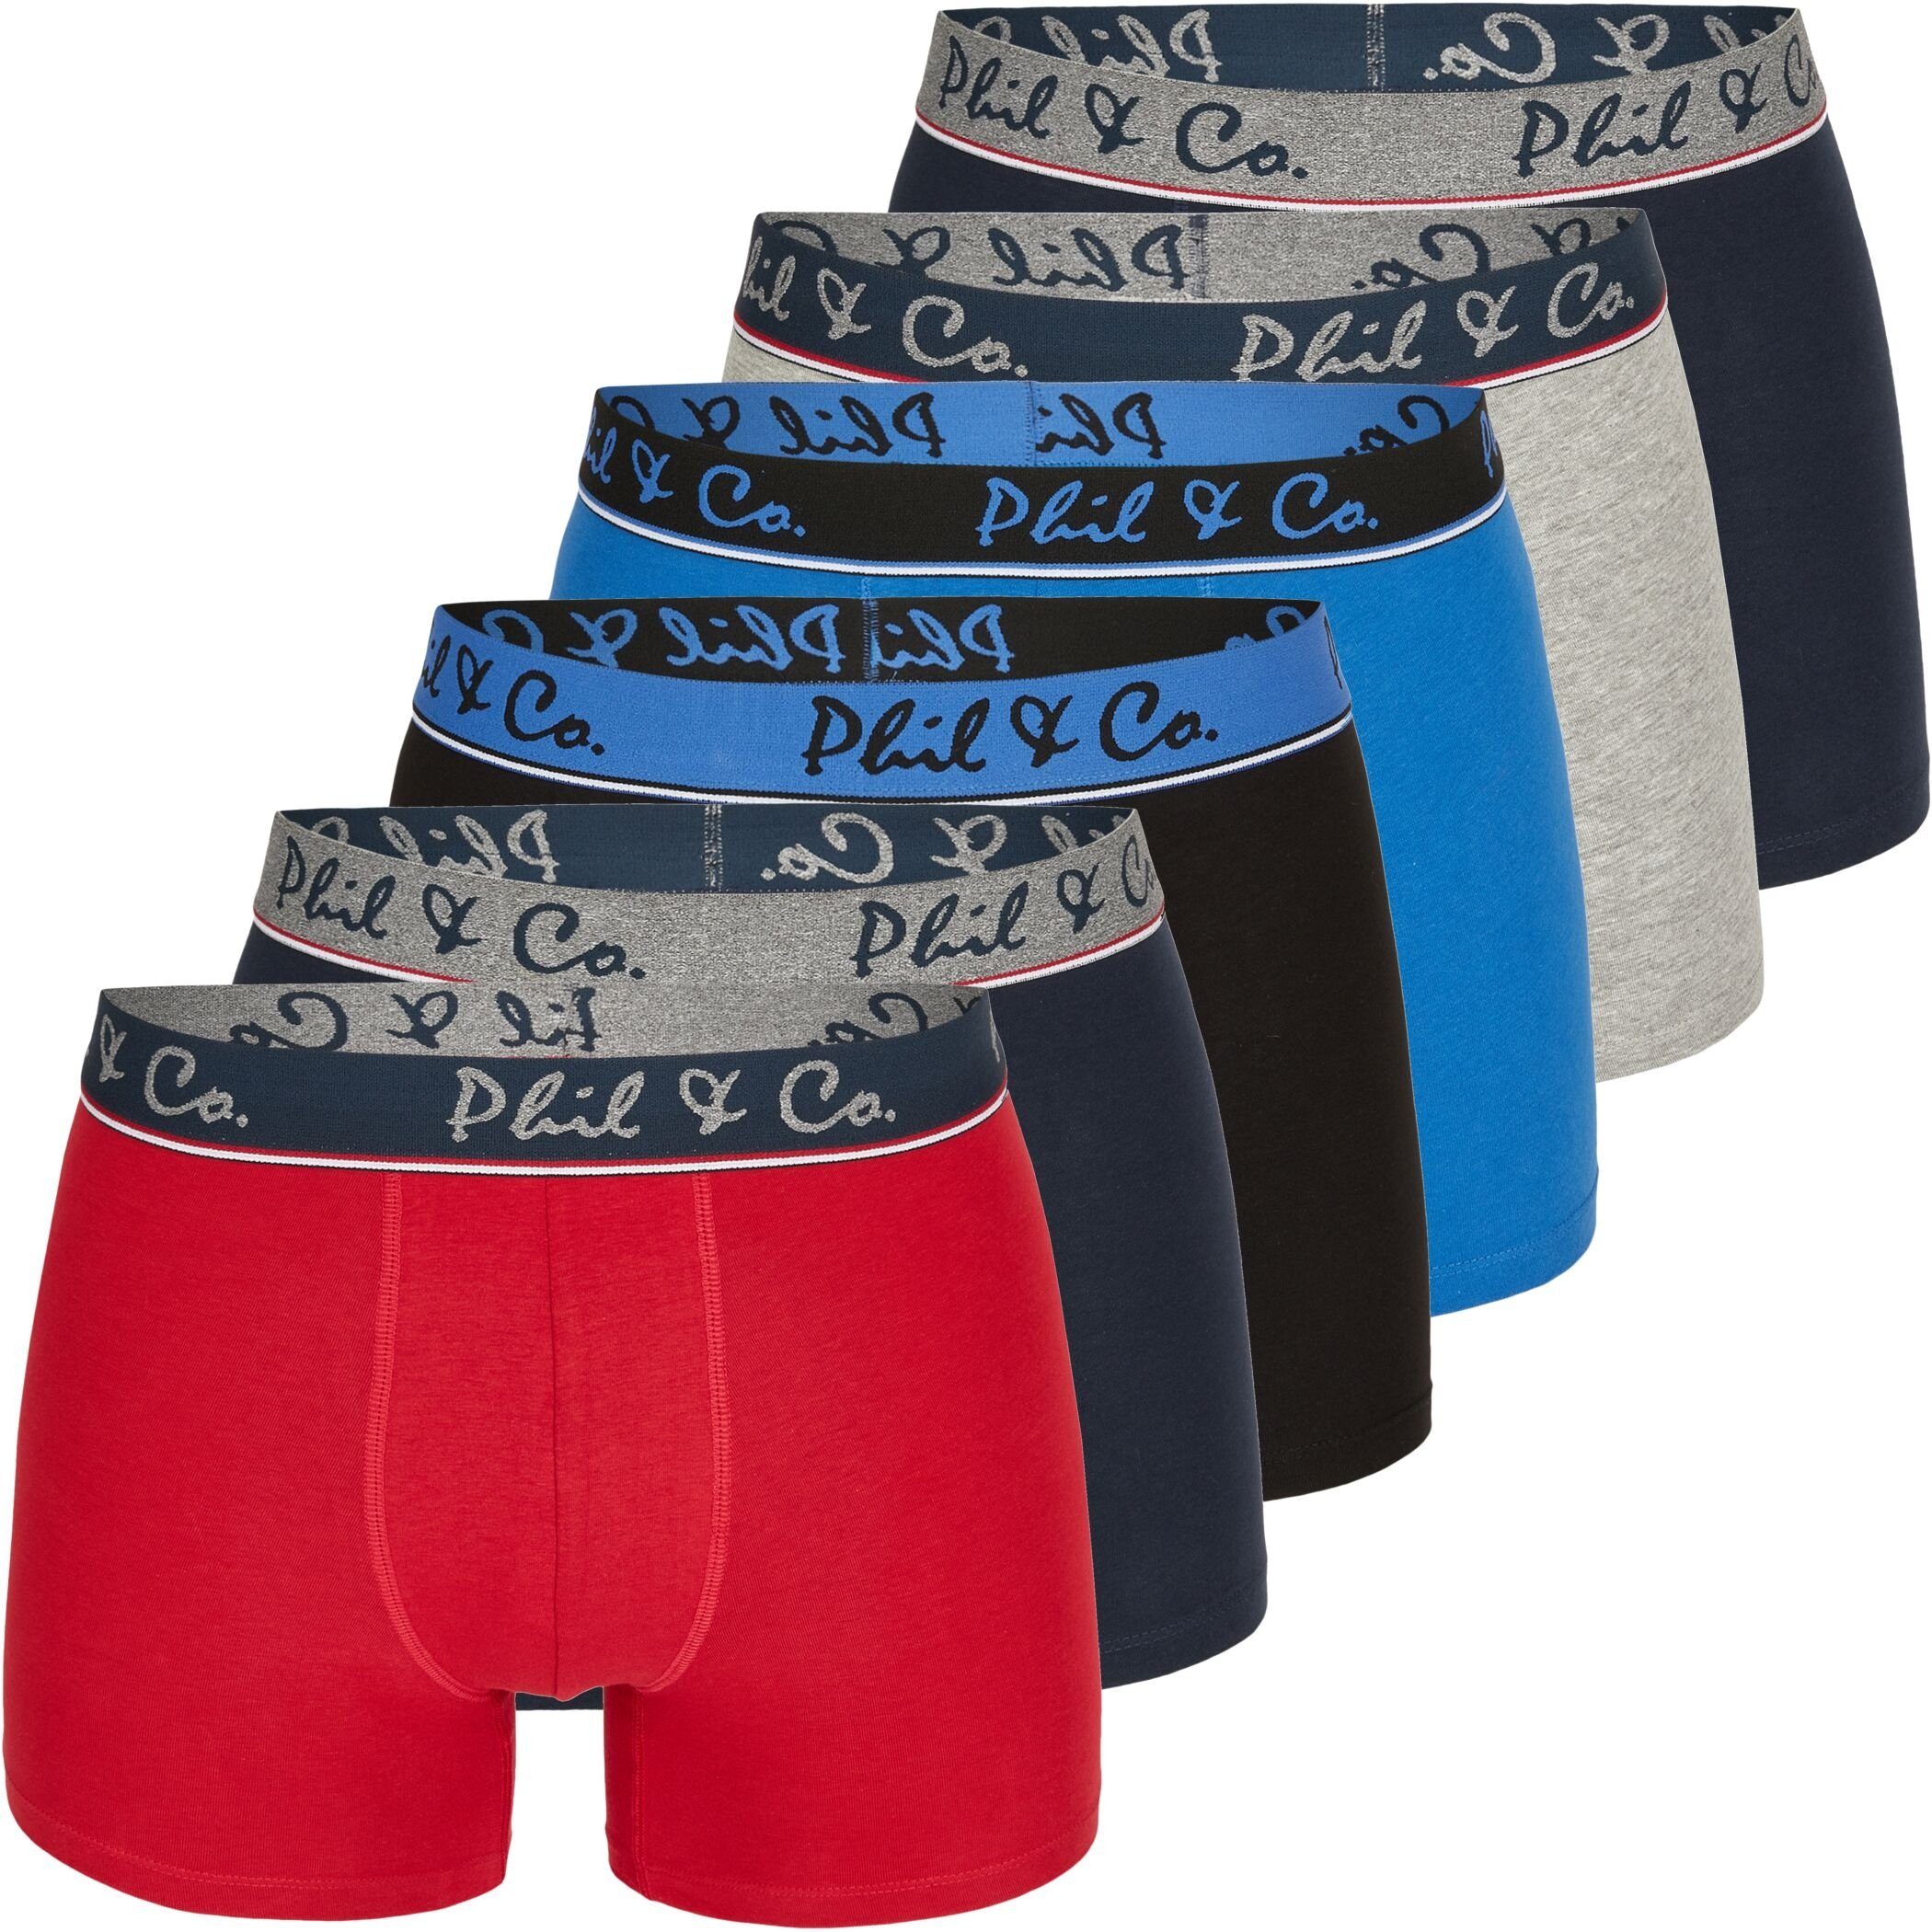 Phil & Co. Boxershorts 6er Pack Phil & Co Berlin Jersey Boxershorts Trunk Short Pant FARBWAHL (1-St) DESIGN 20